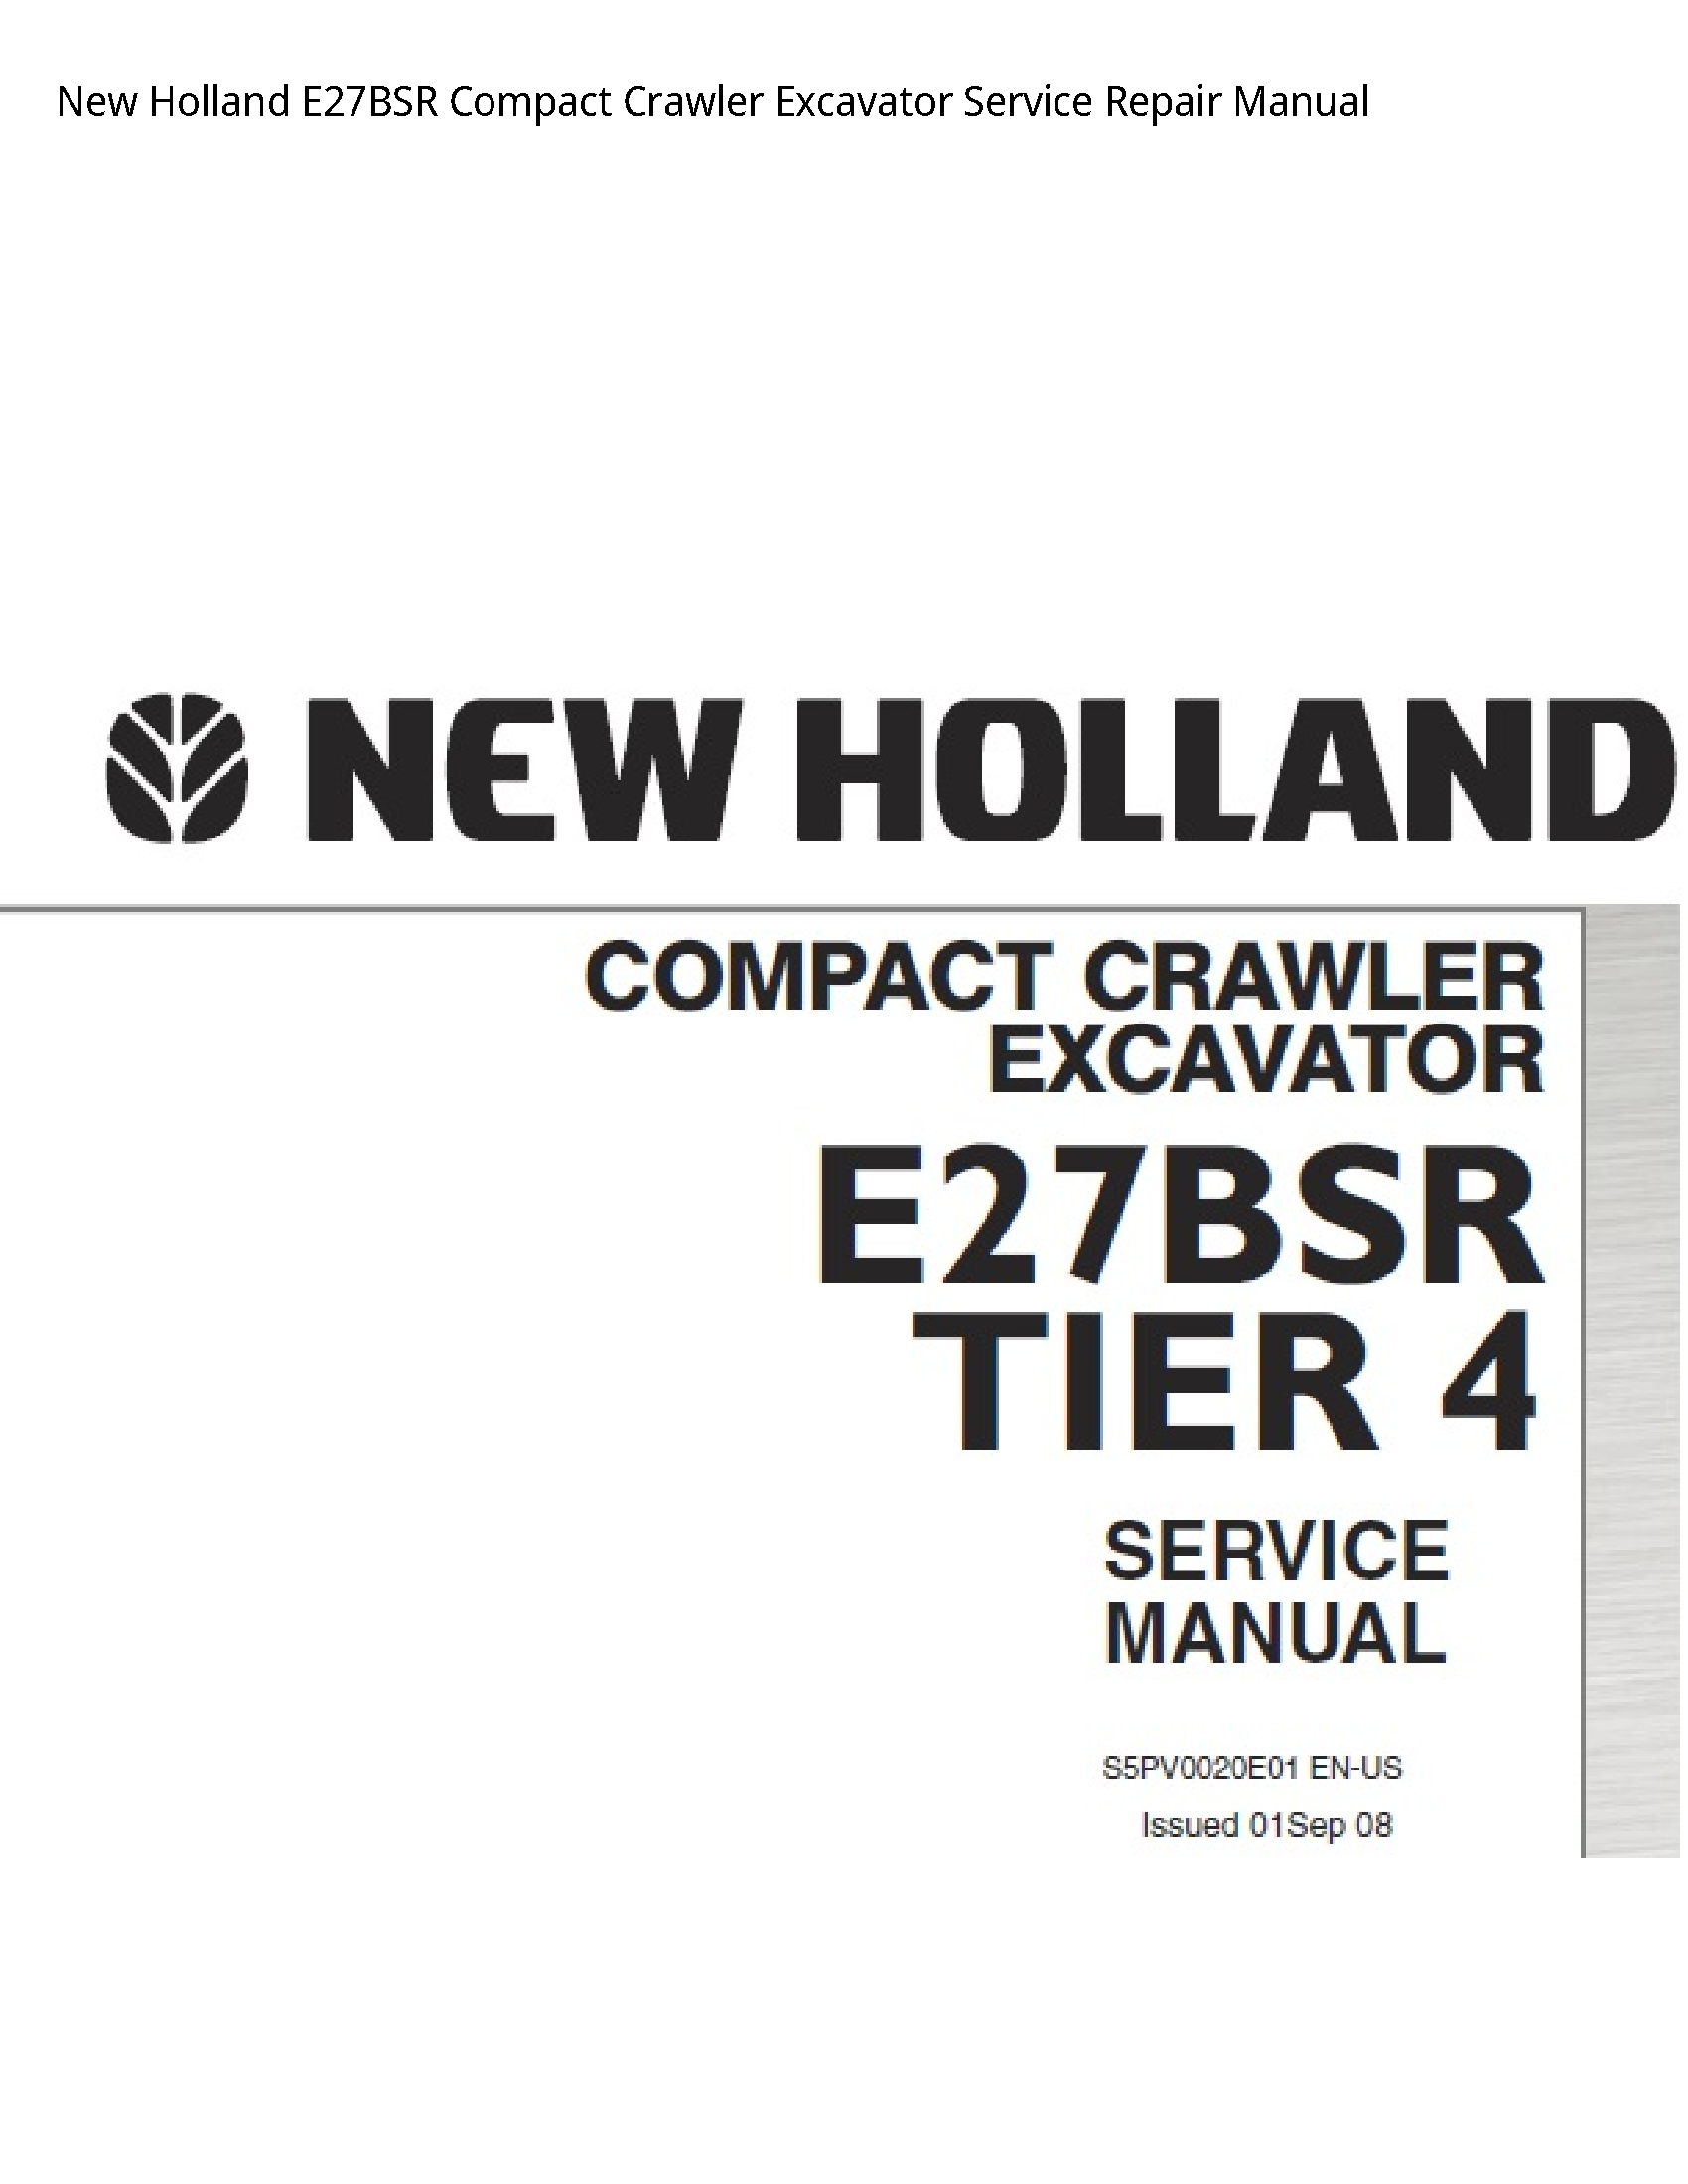 New Holland E27BSR Compact Crawler Excavator manual